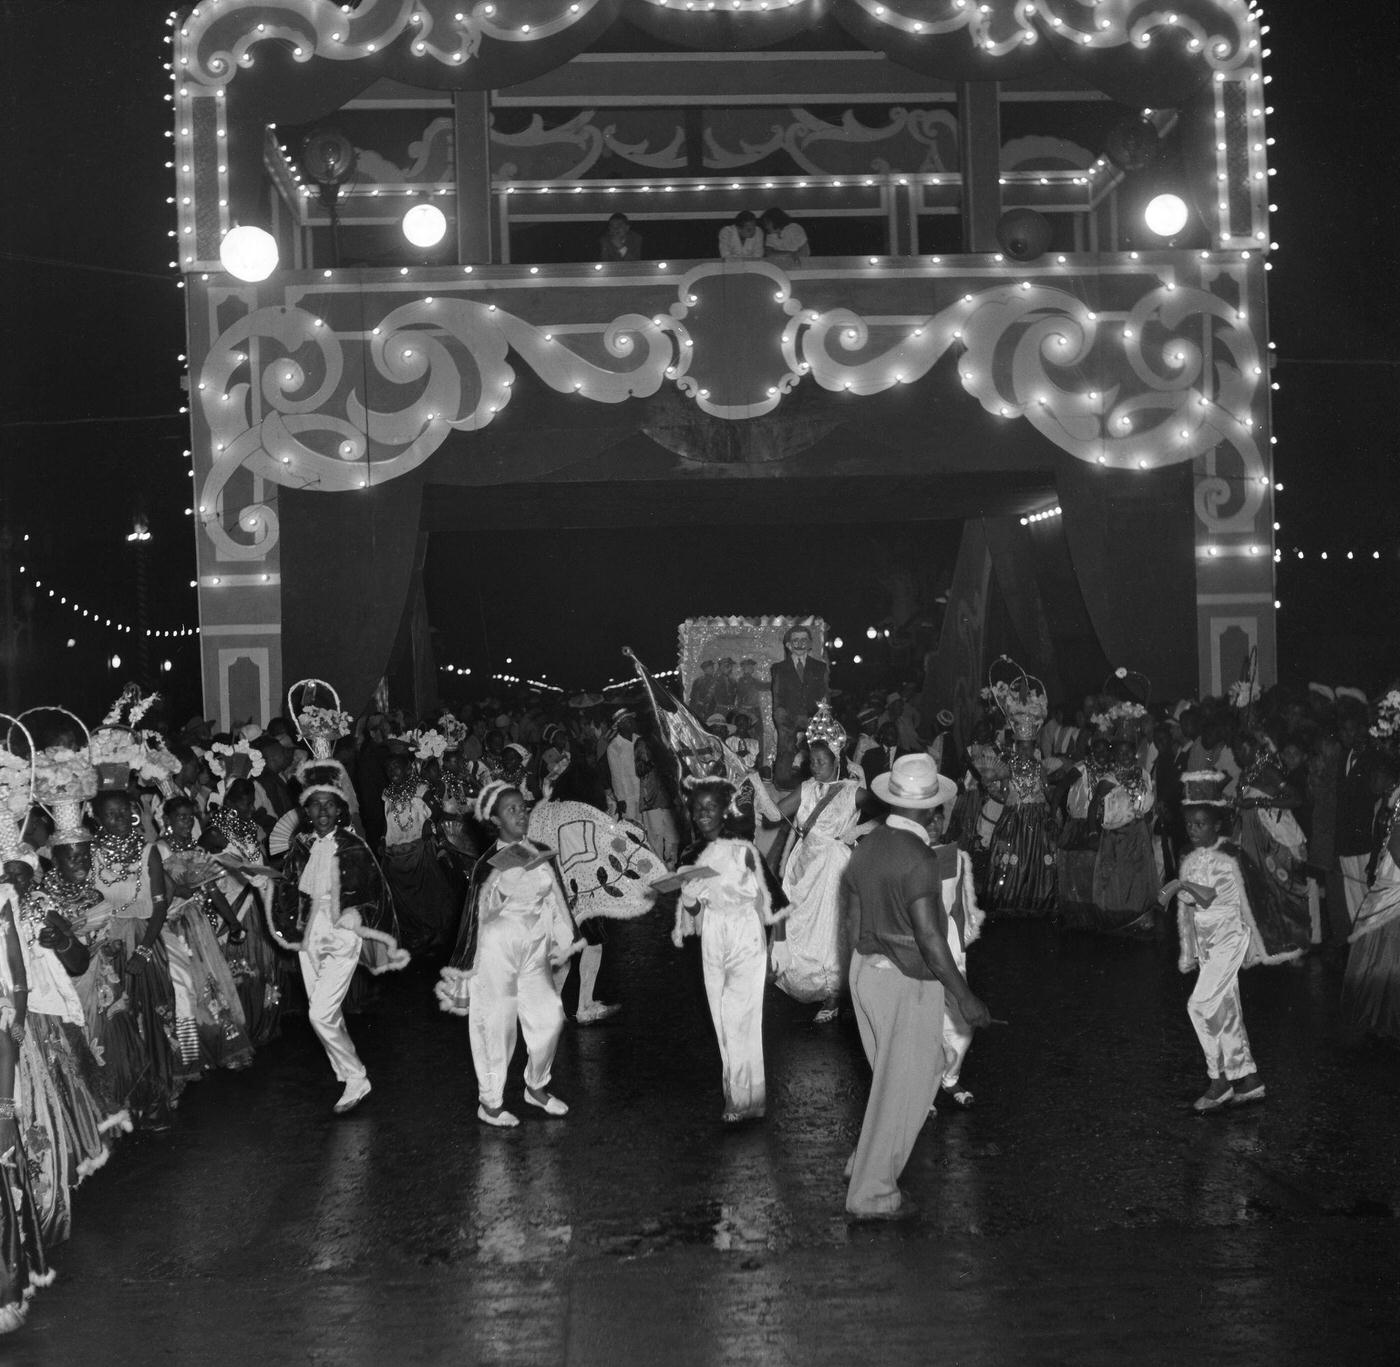 Carnival parade revelers march in Rio de Janeiro's Carnival. 1953